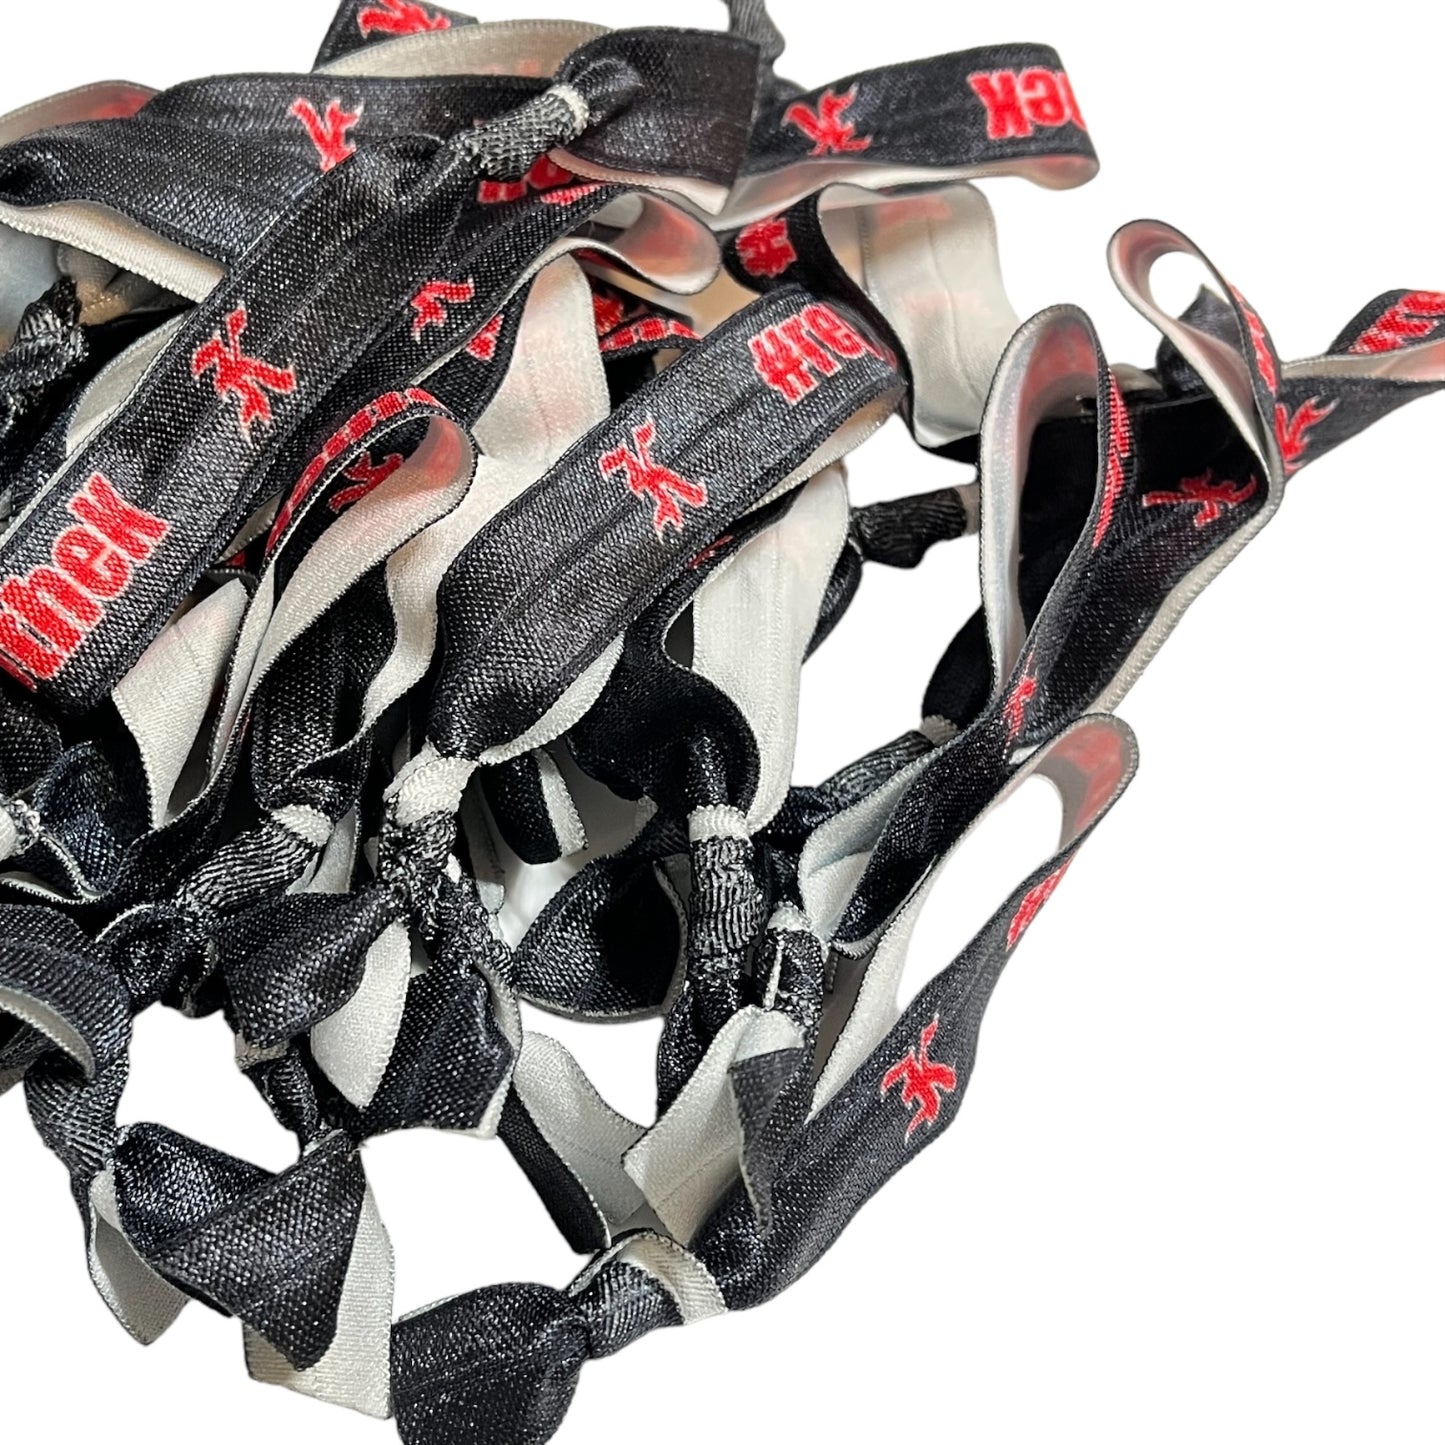 Custom Hair Tie Bracelets - Add your logo and information - Bulk Discounts!